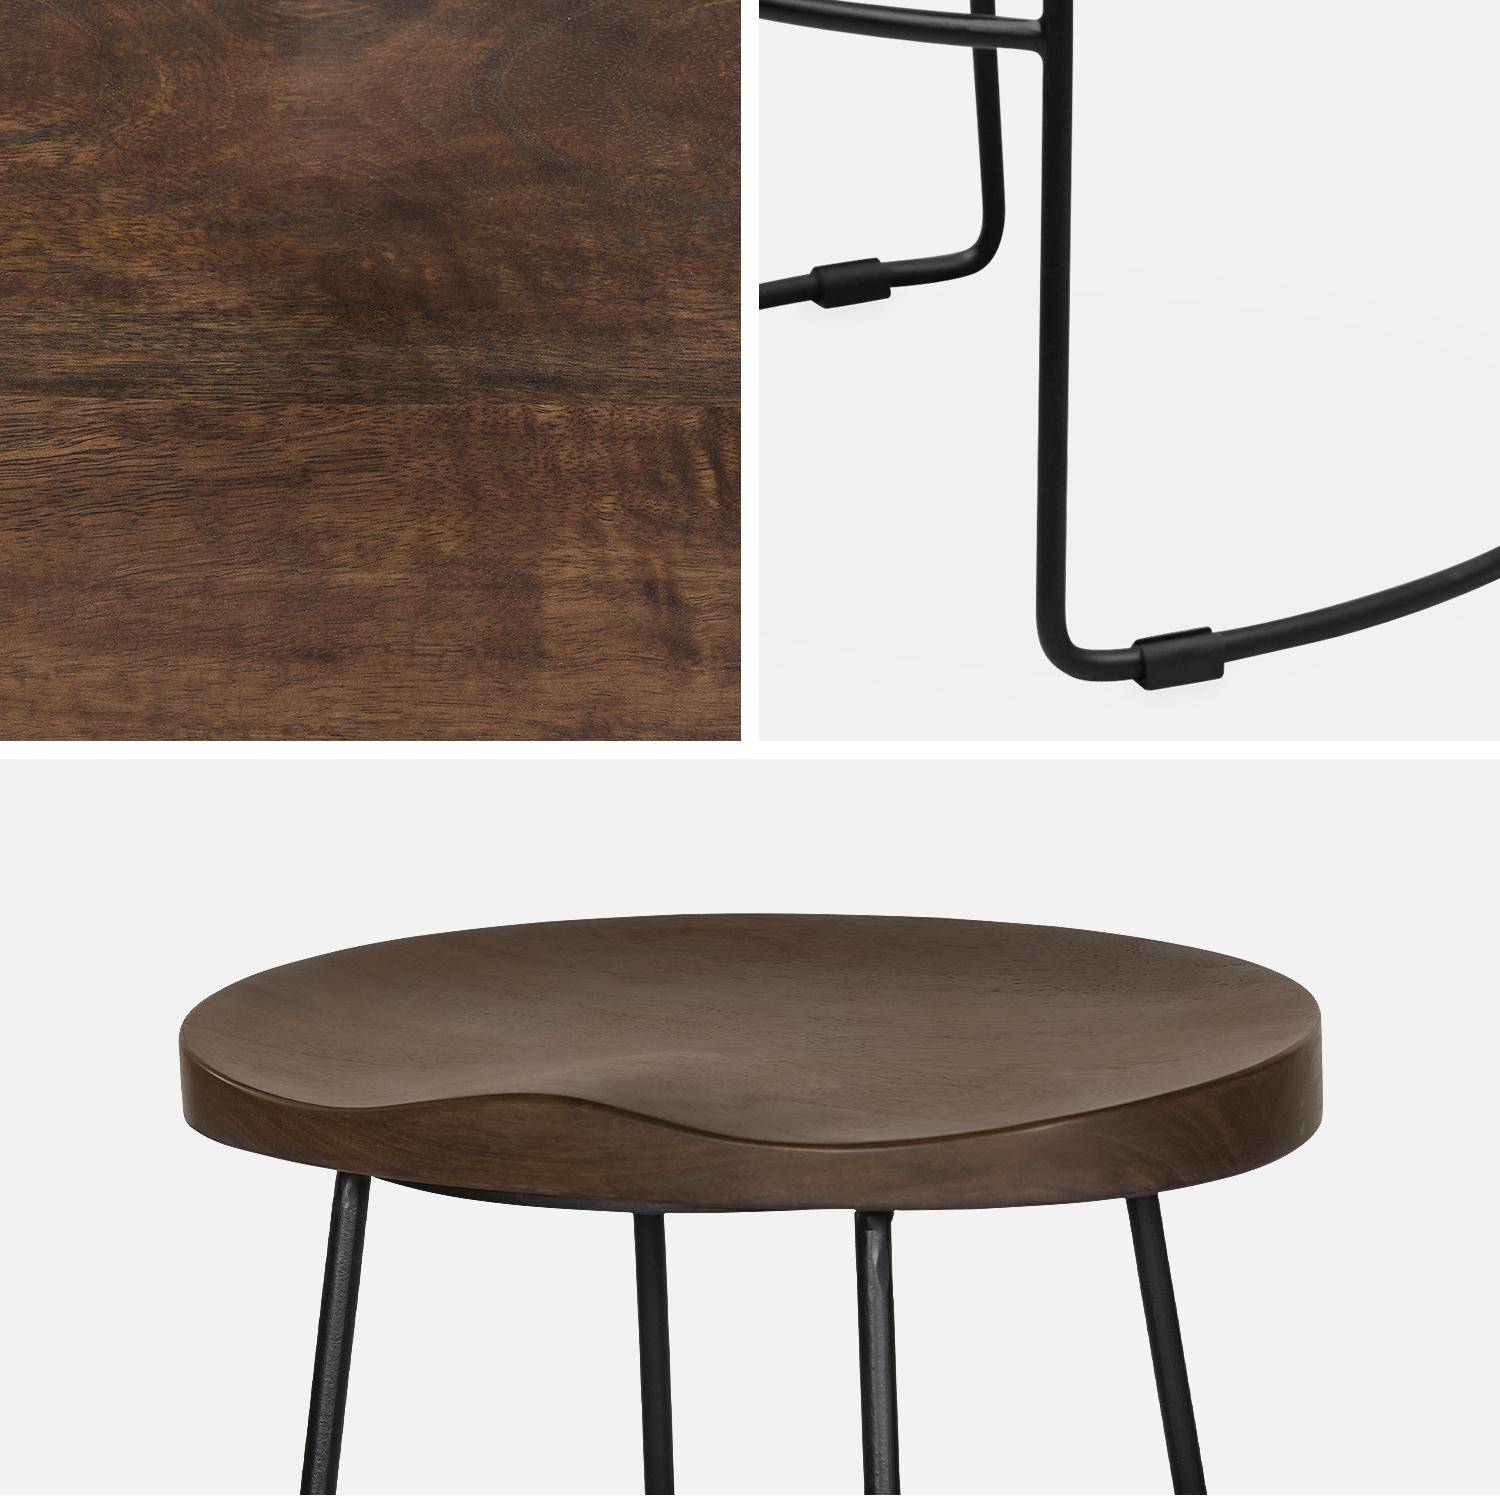 Pair of industrial metal and wooden bar stools, 44x36x65cm, Jaya, Light Walnut, Mango wood seat, black metal legs Photo8